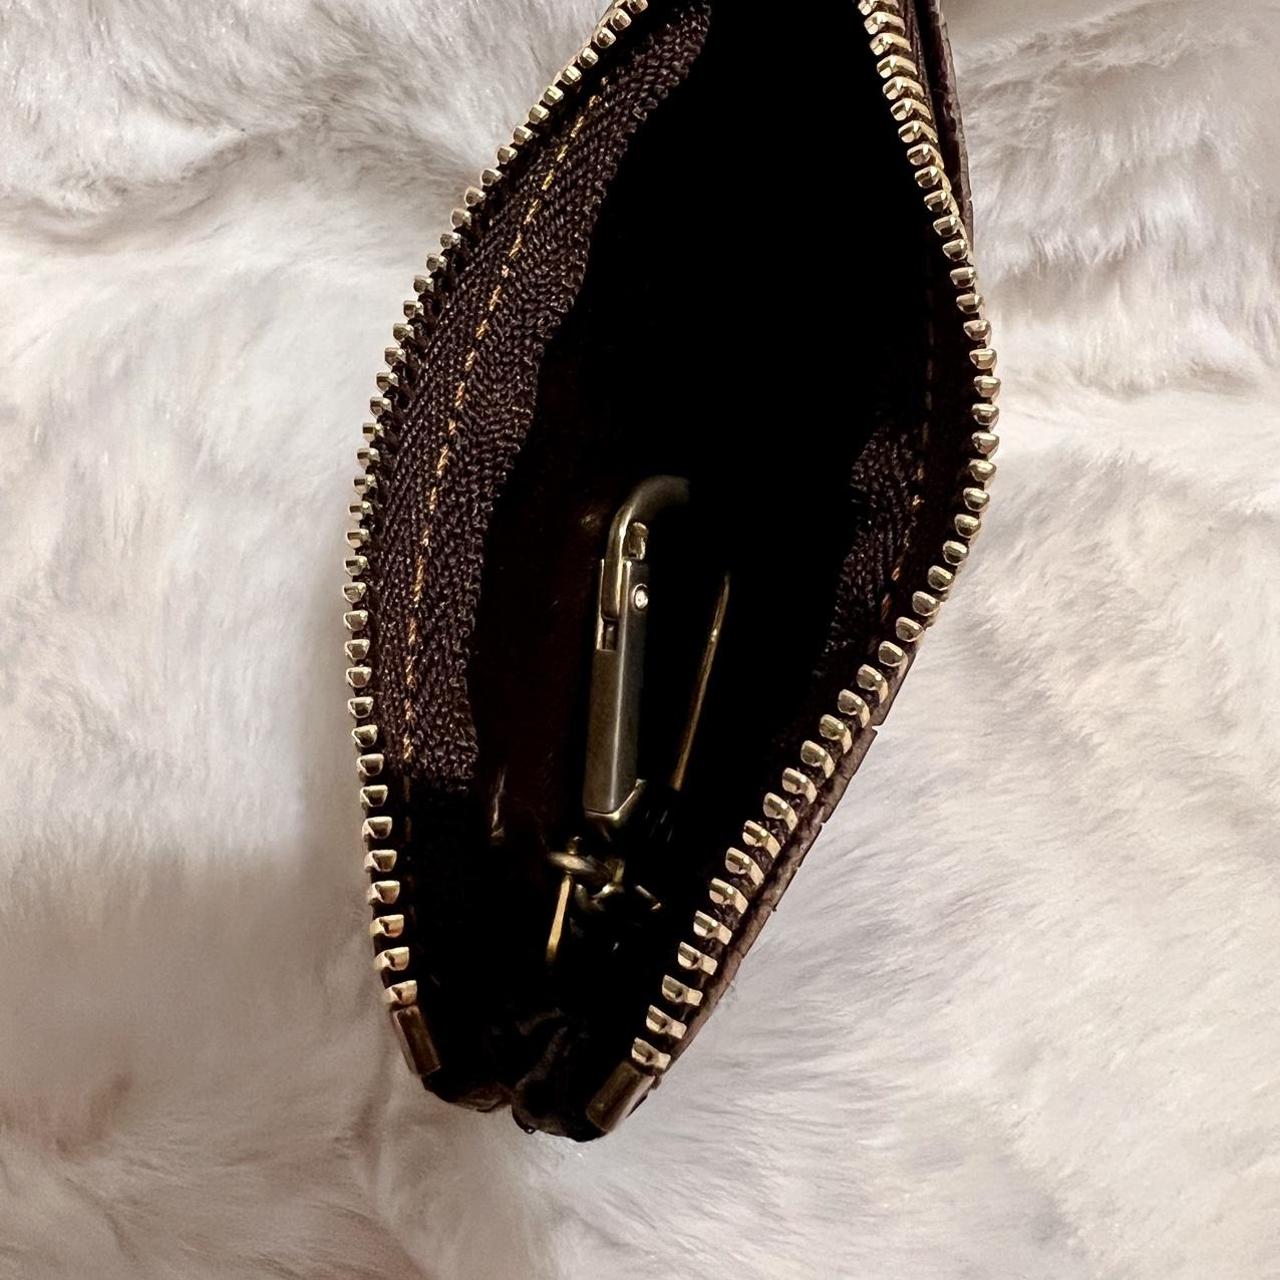 Louis Vuitton key pouch white checkered great - Depop